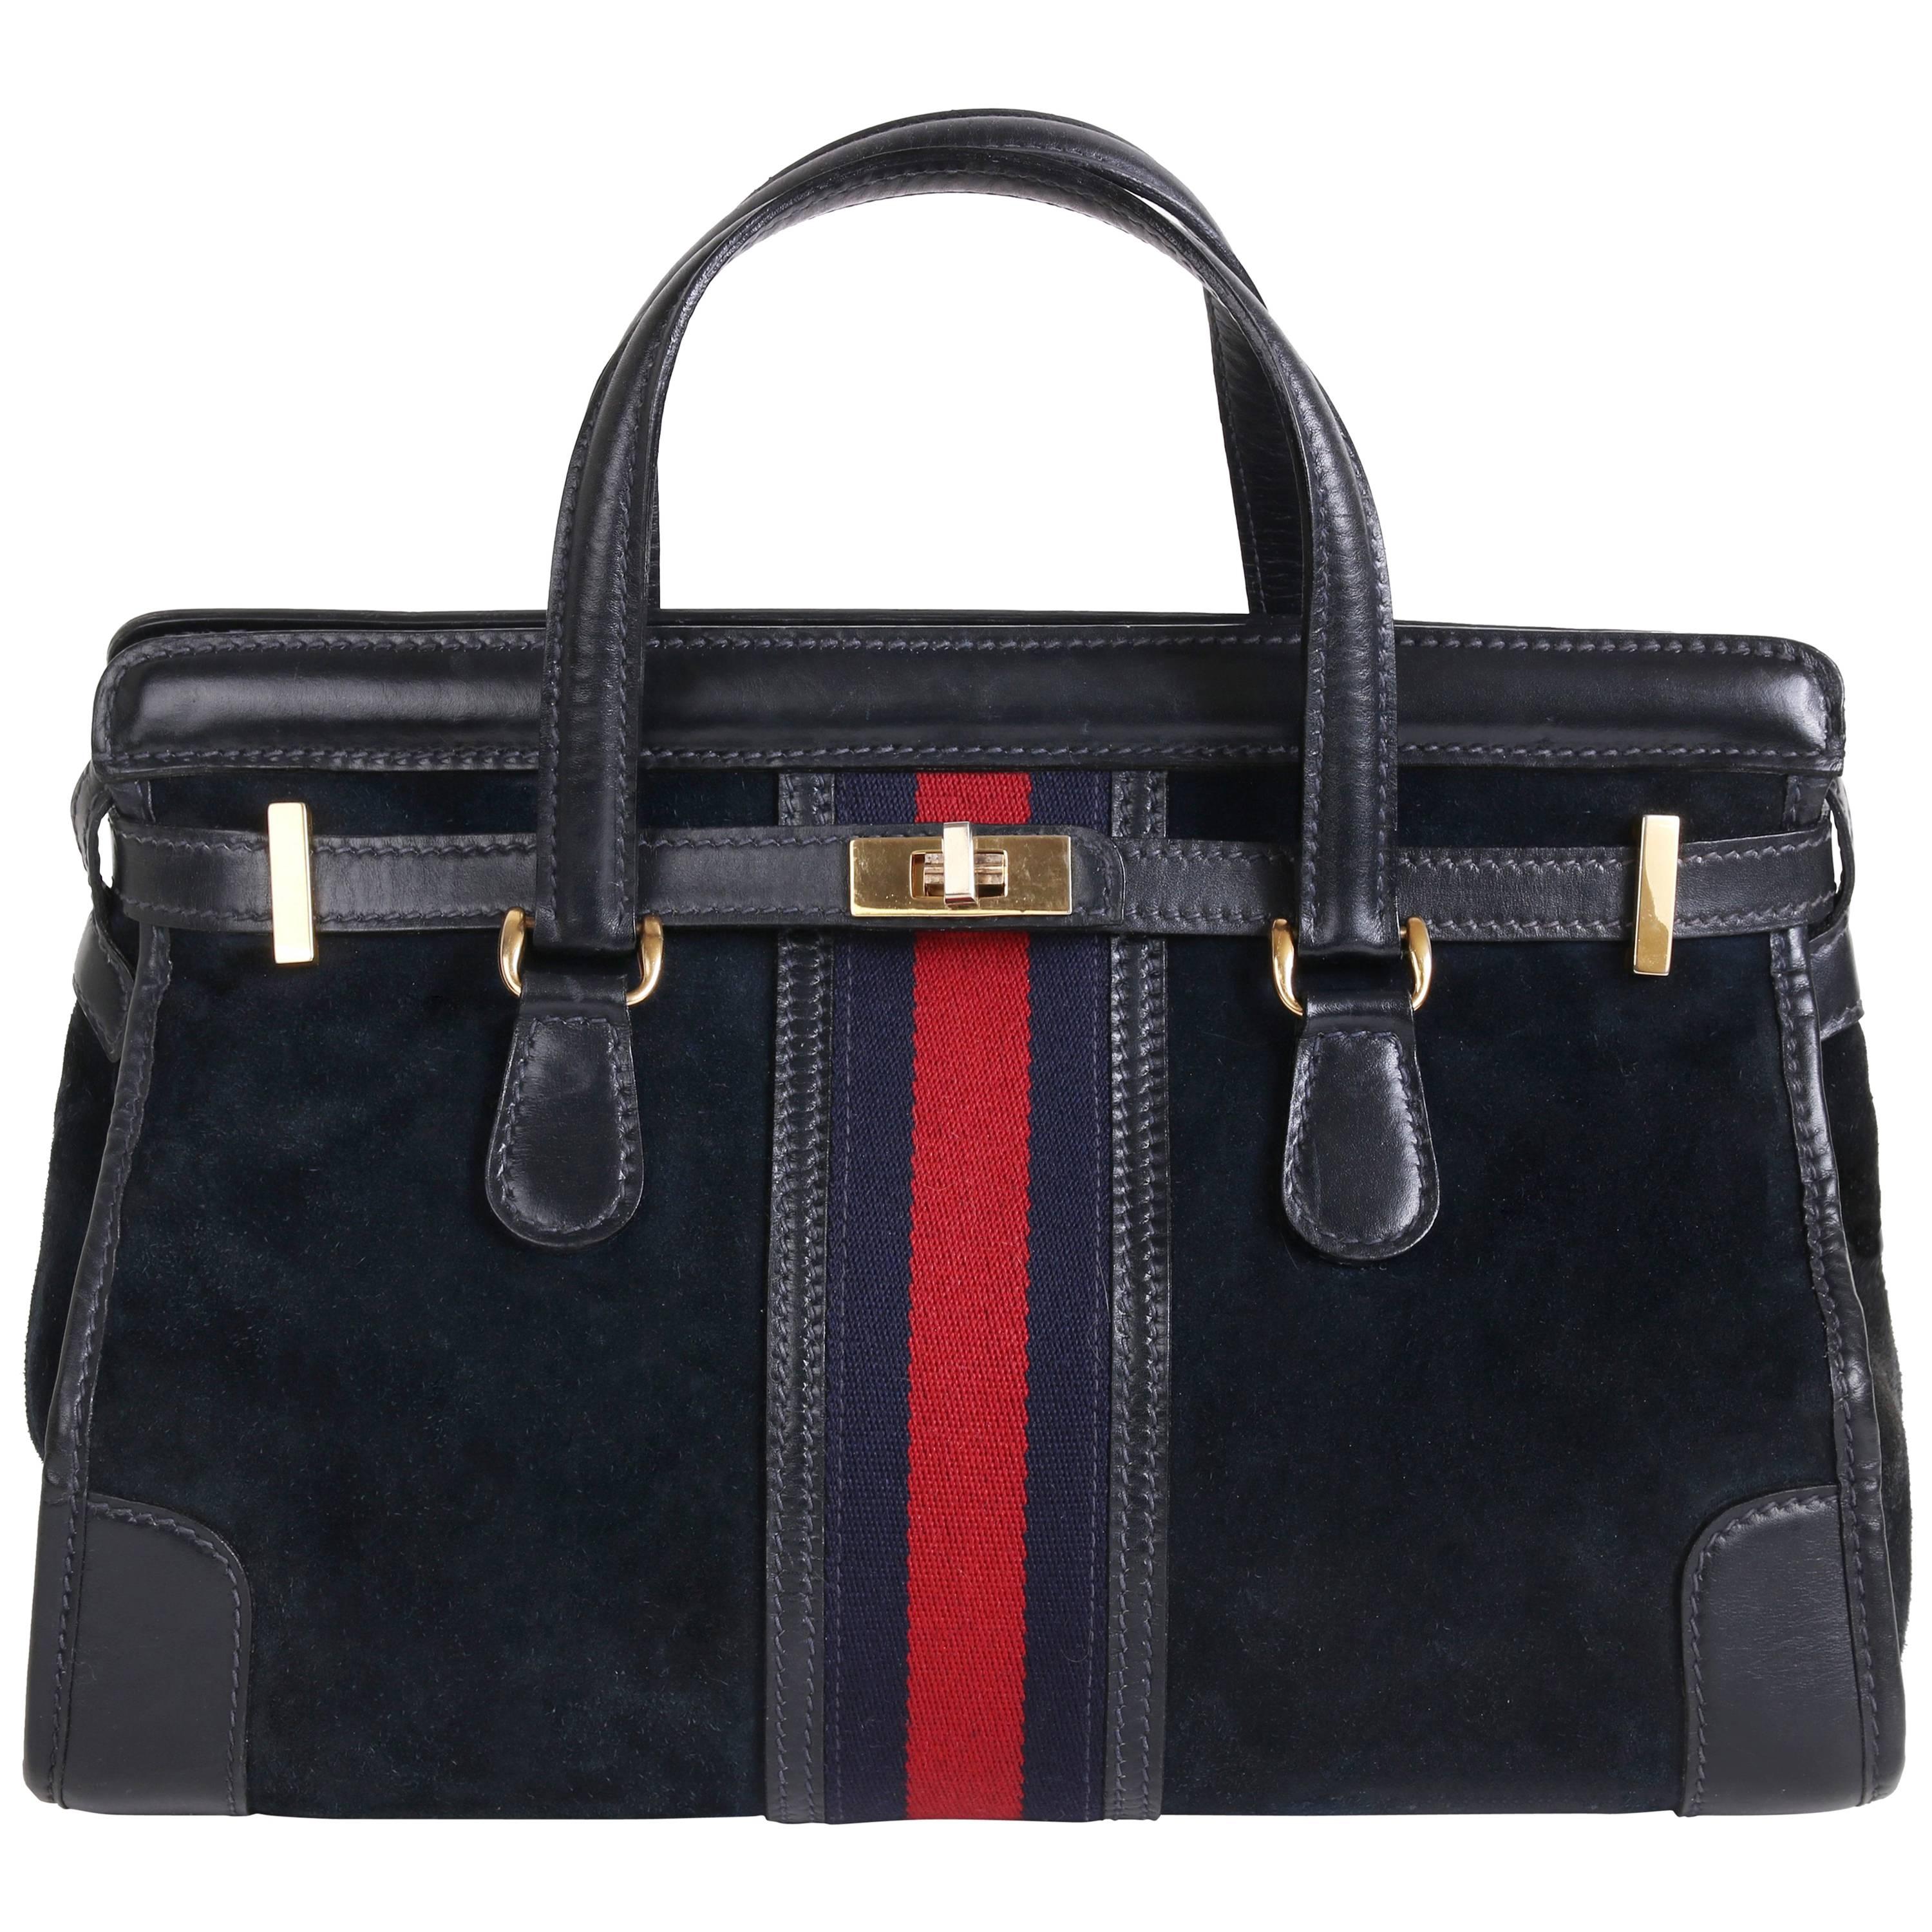 Rare 1970s Gucci Navy Blue Suede Doctor's Bag Handbag Tote w/Gucci Racer Stripe